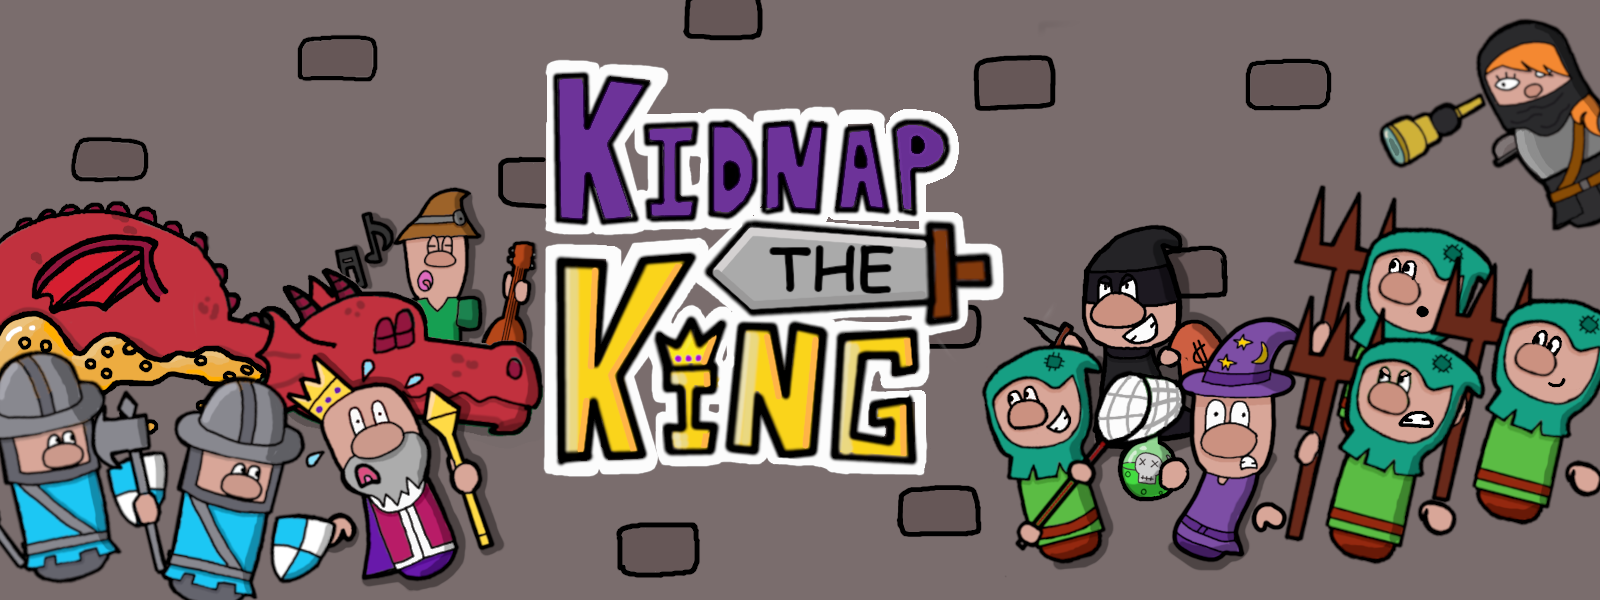 KIDNAP THE KING